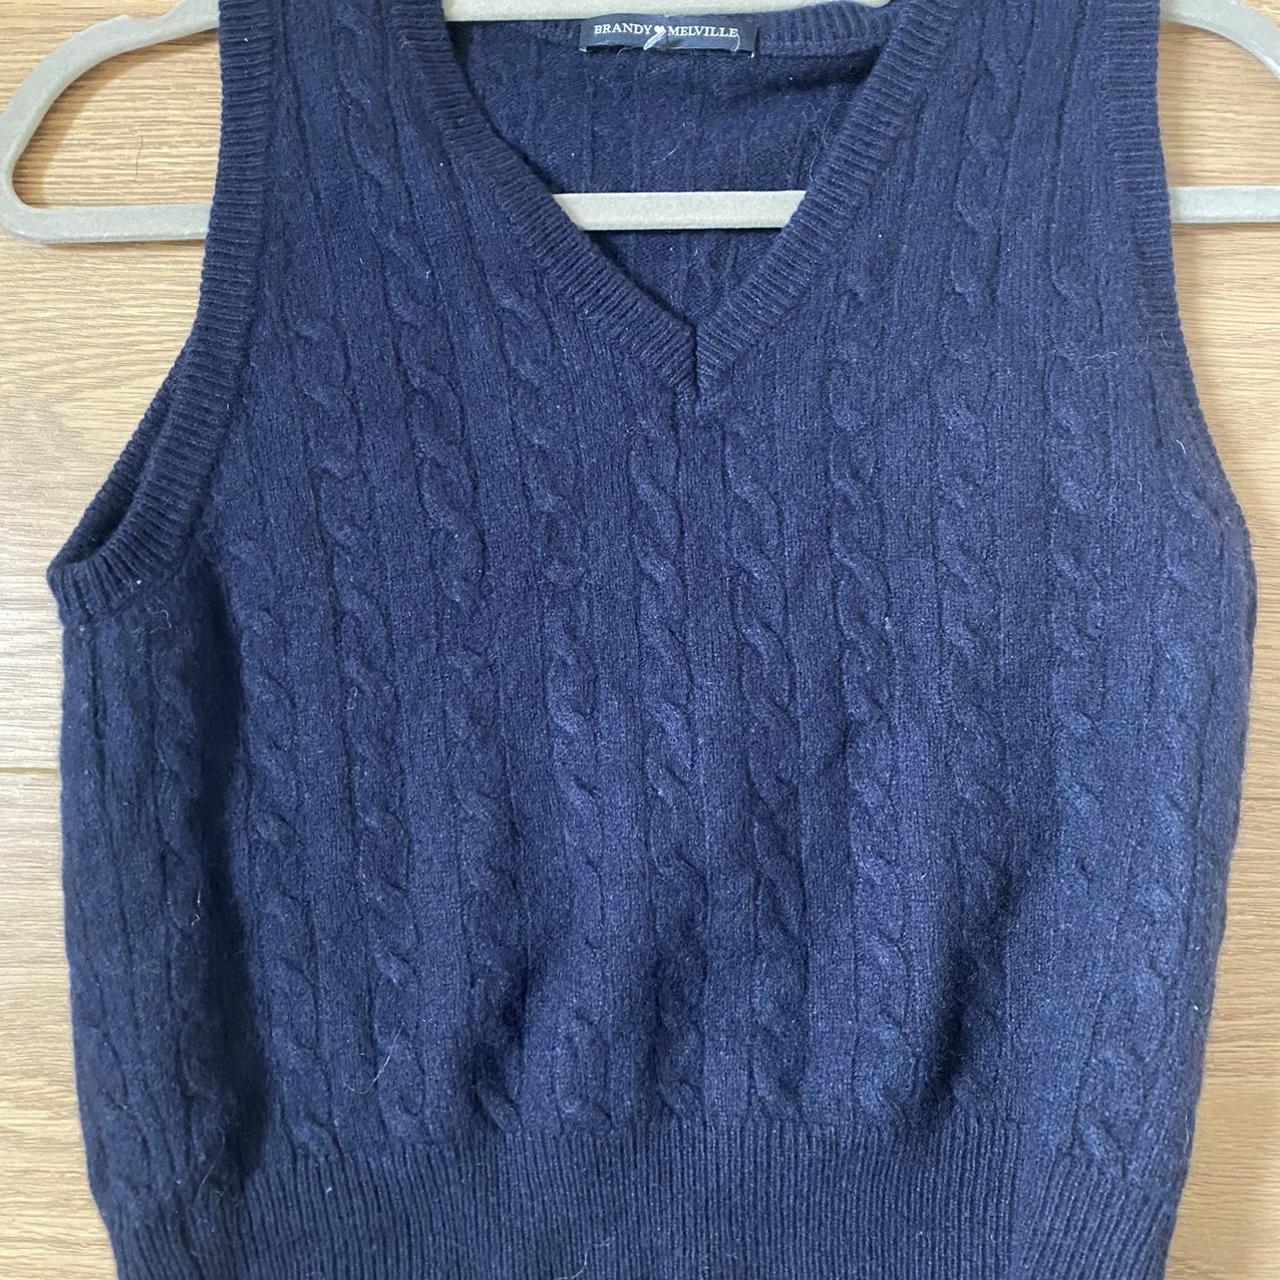 Brandy Melville cable knit navy sweater vest super soft - Depop